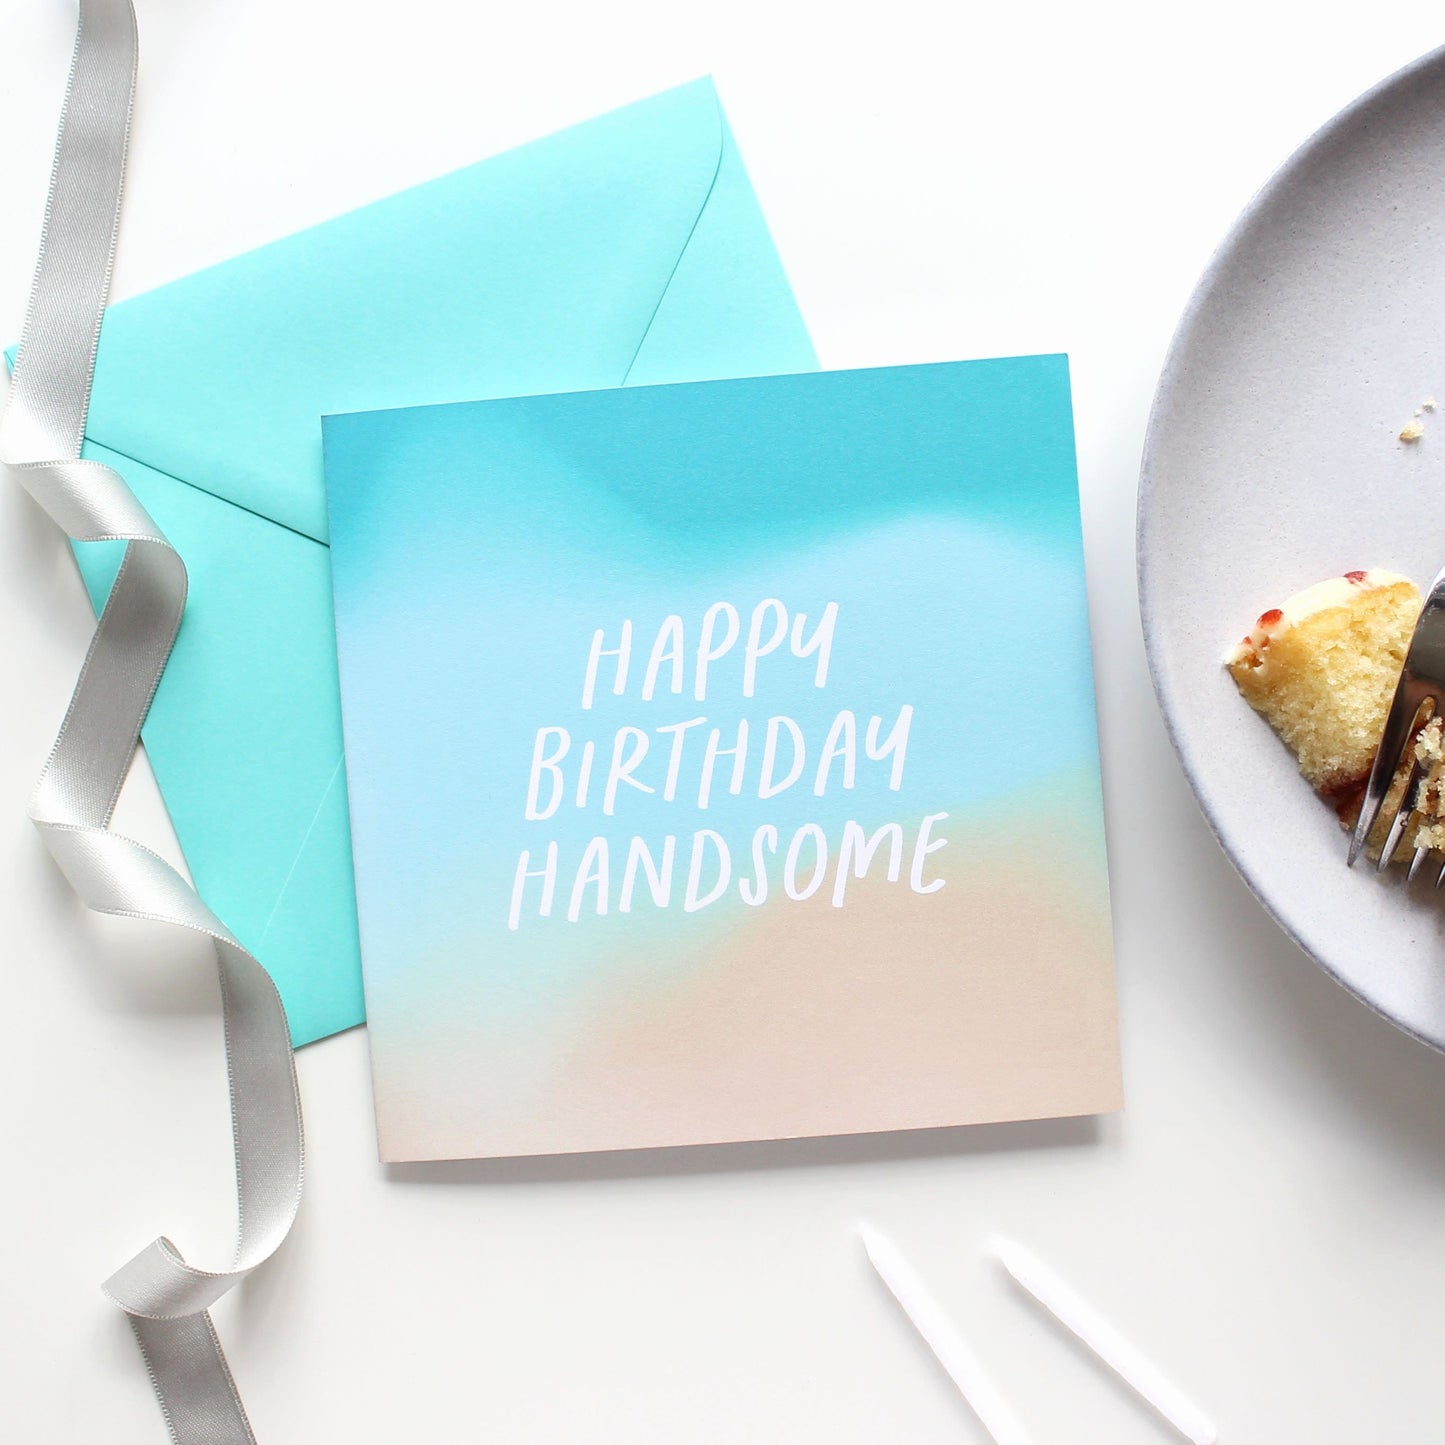 Happy birthday handsome birthday card from Purple Tree Designs